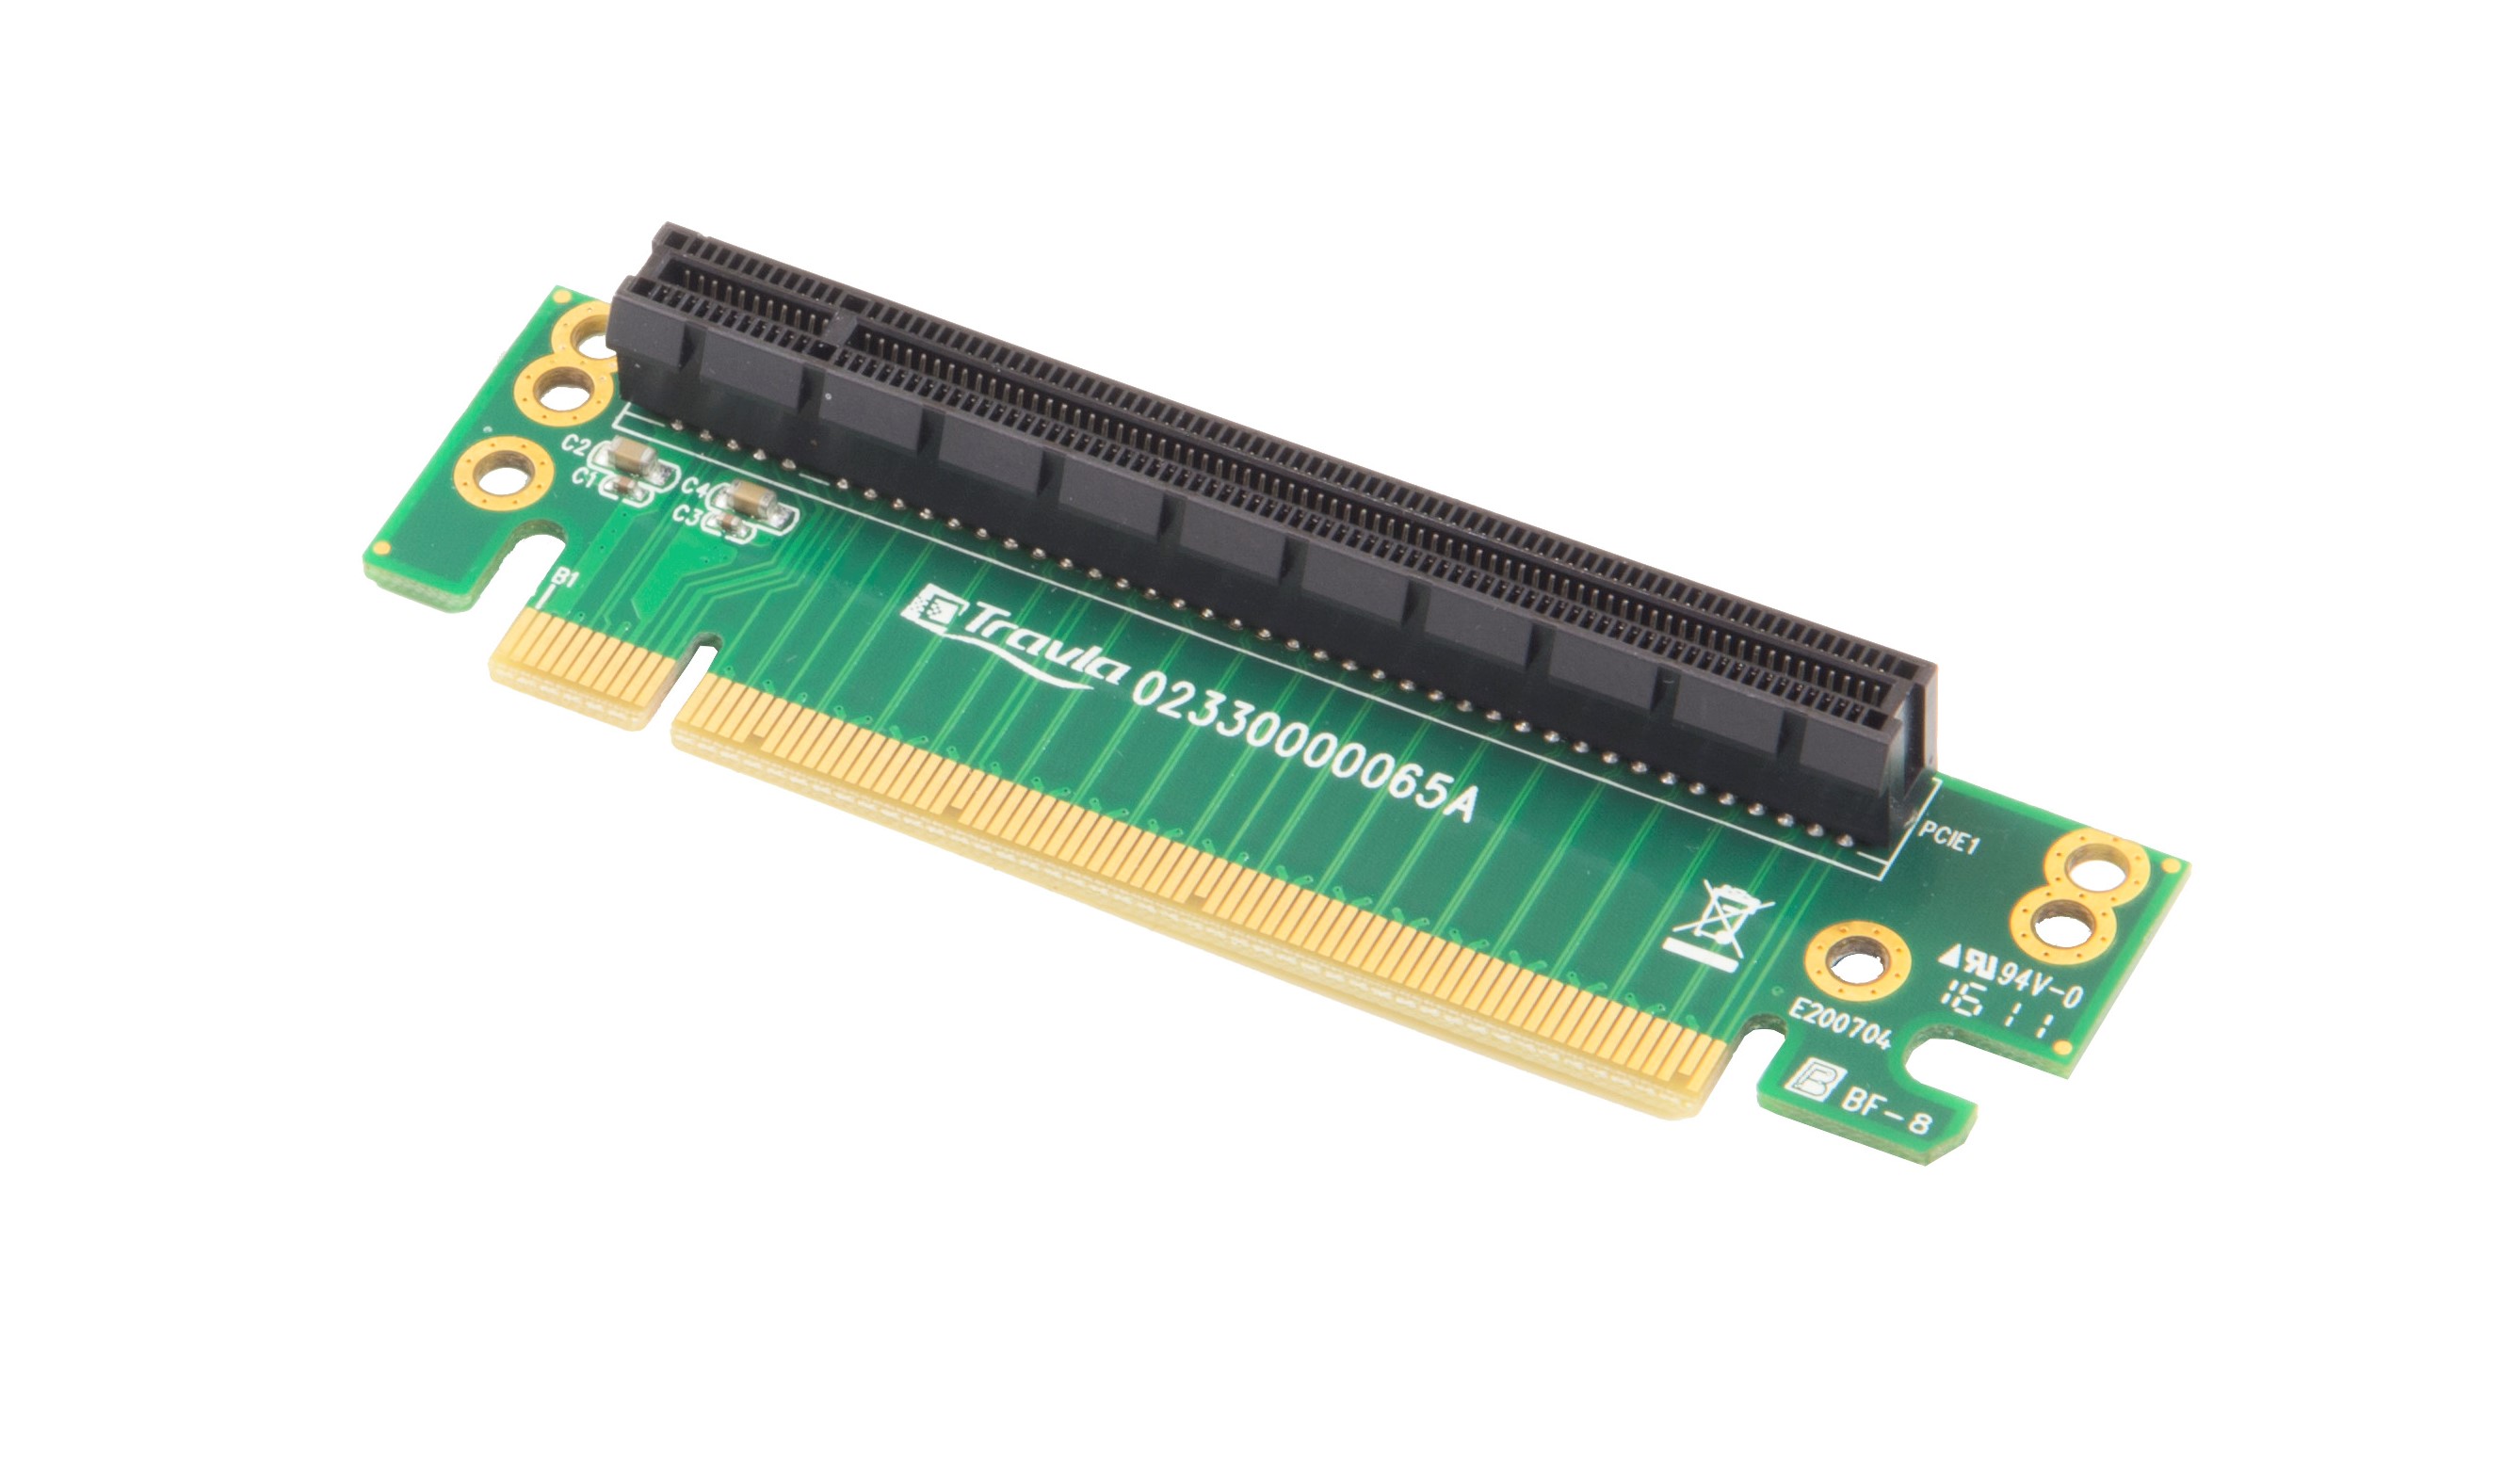 PCIe X16 Riser Card for 1U  |Products|Accessories|PCI-Express Riser Card